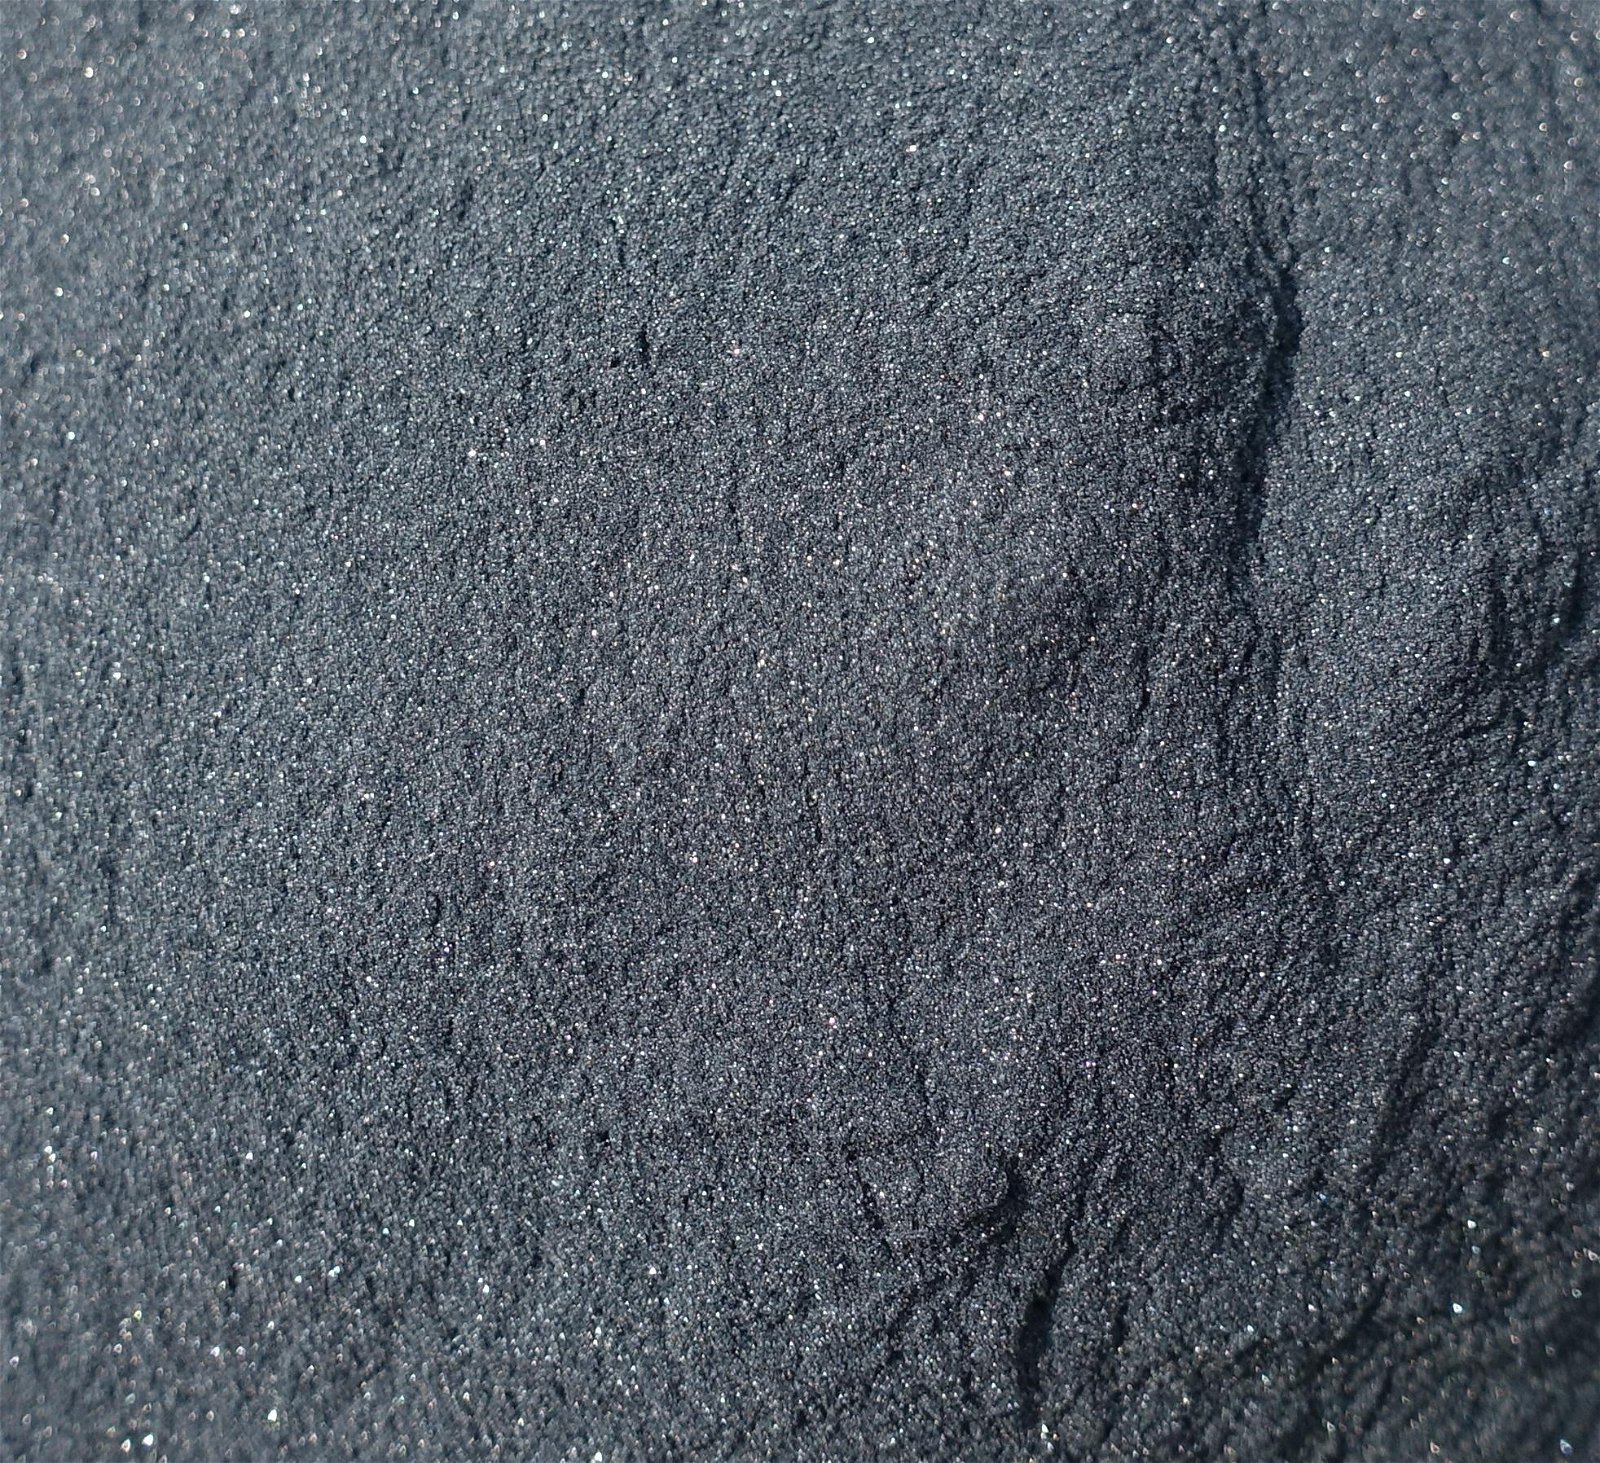 FEPA  grade Black silicon cargbide SIC grit and powder